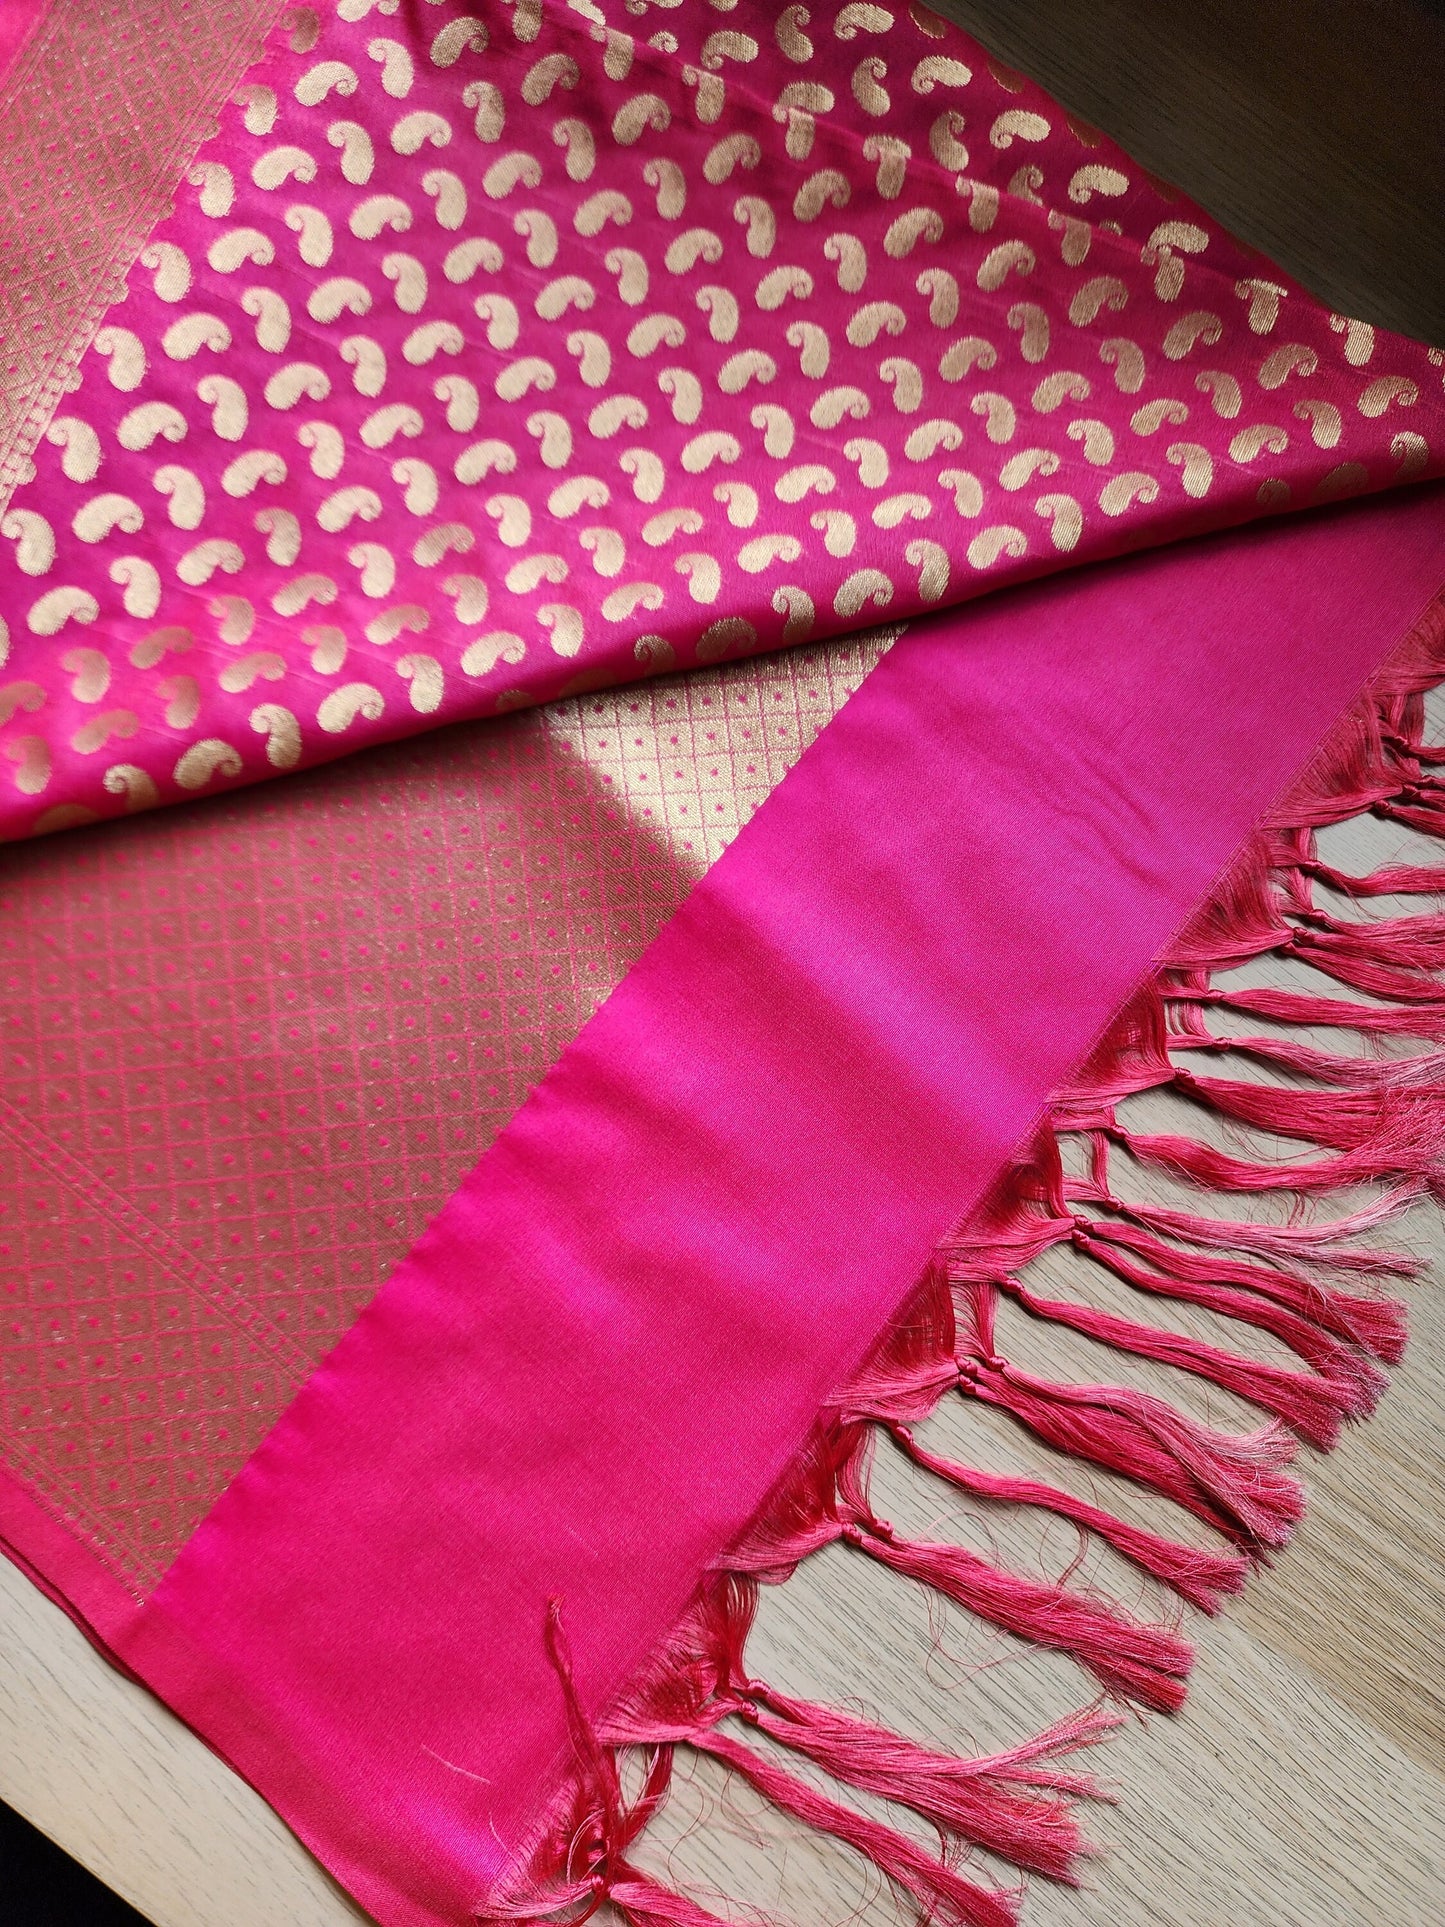 Banarasi Silk Pink Dupatta with gold handweaving, Indian traditional and Festive designer dupatta, luxurious soft Banarsi dupatta